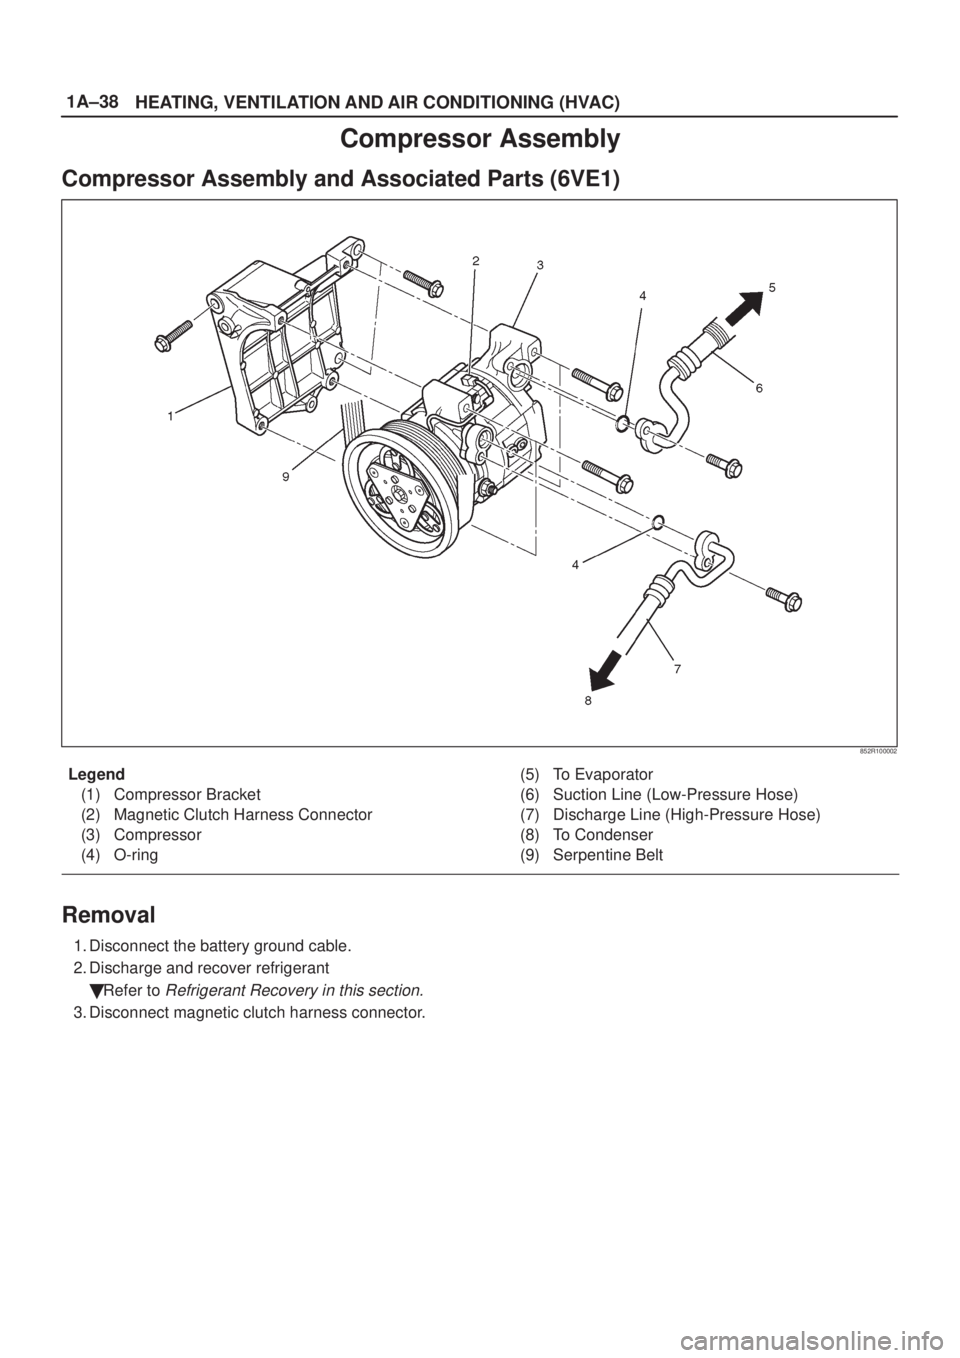 ISUZU AXIOM 2002  Service Service Manual 1A±38
HEATING, VENTILATION AND AIR CONDITIONING (HVAC)
Compressor Assembly
Compressor Assembly and Associated Parts (6VE1)
852R100002
Legend
(1) Compressor Bracket
(2) Magnetic Clutch Harness Connect